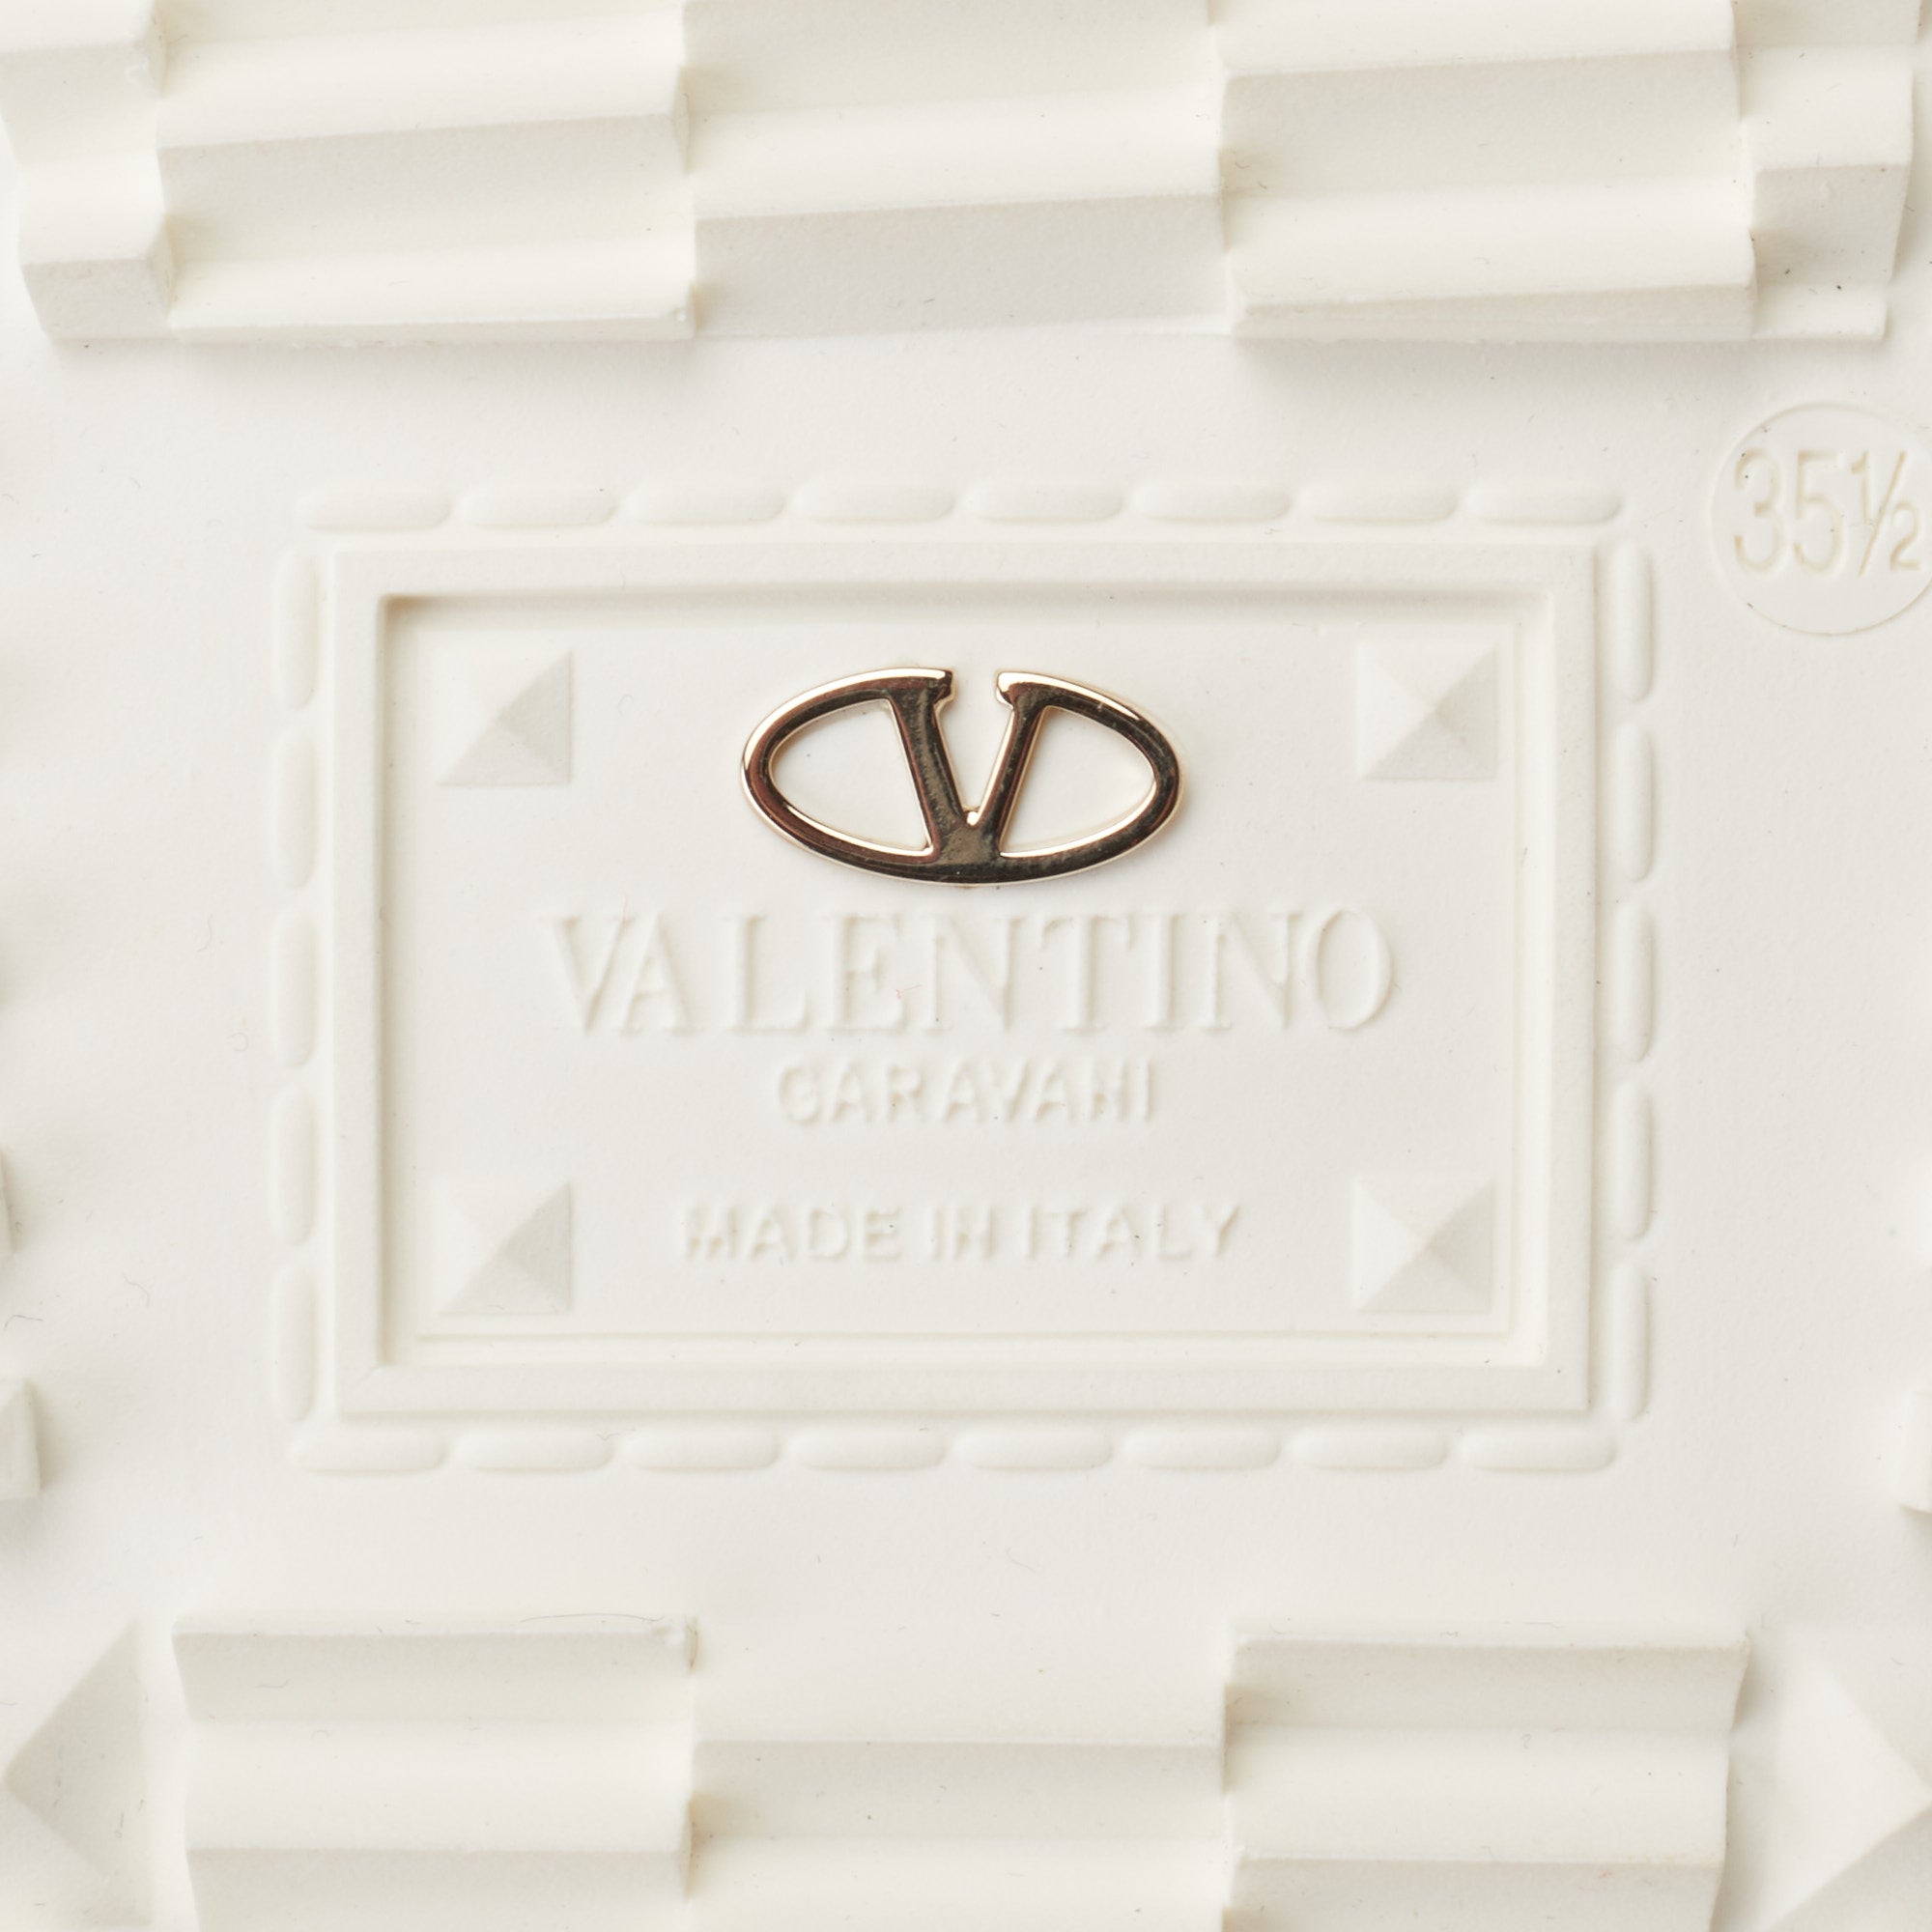 VALENTINO Garavani Black-White Stud Flat Sandal EU 35.5 US 5.5 NEW with Box